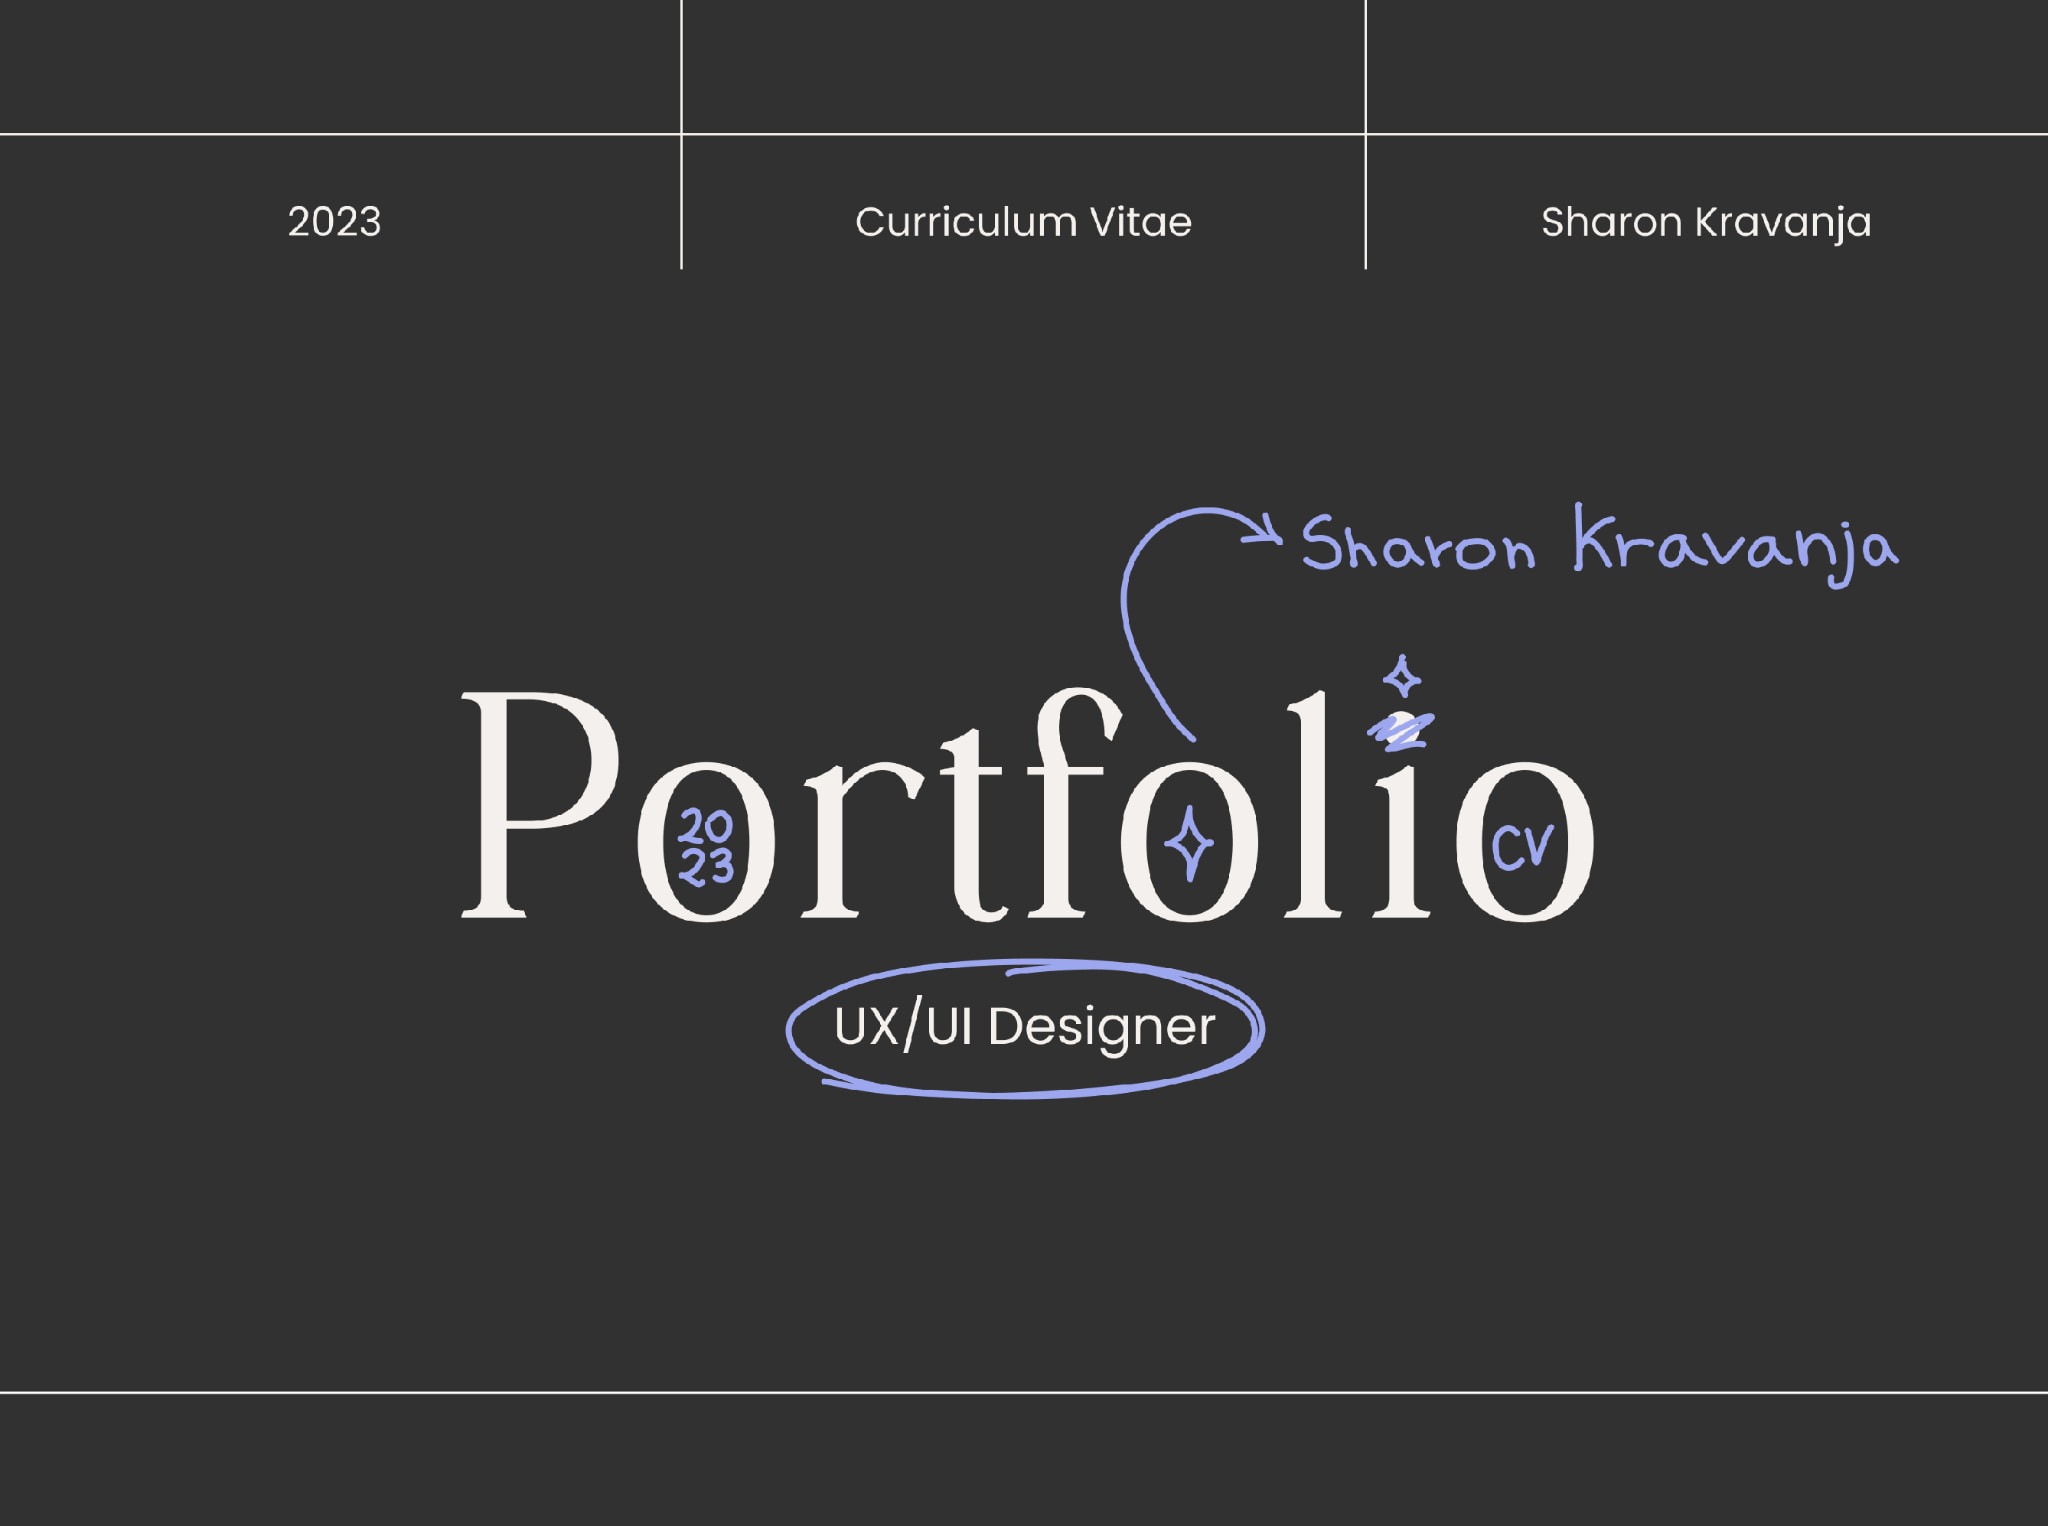 A screenshot of Sharon Kravanja’s UX portfolio